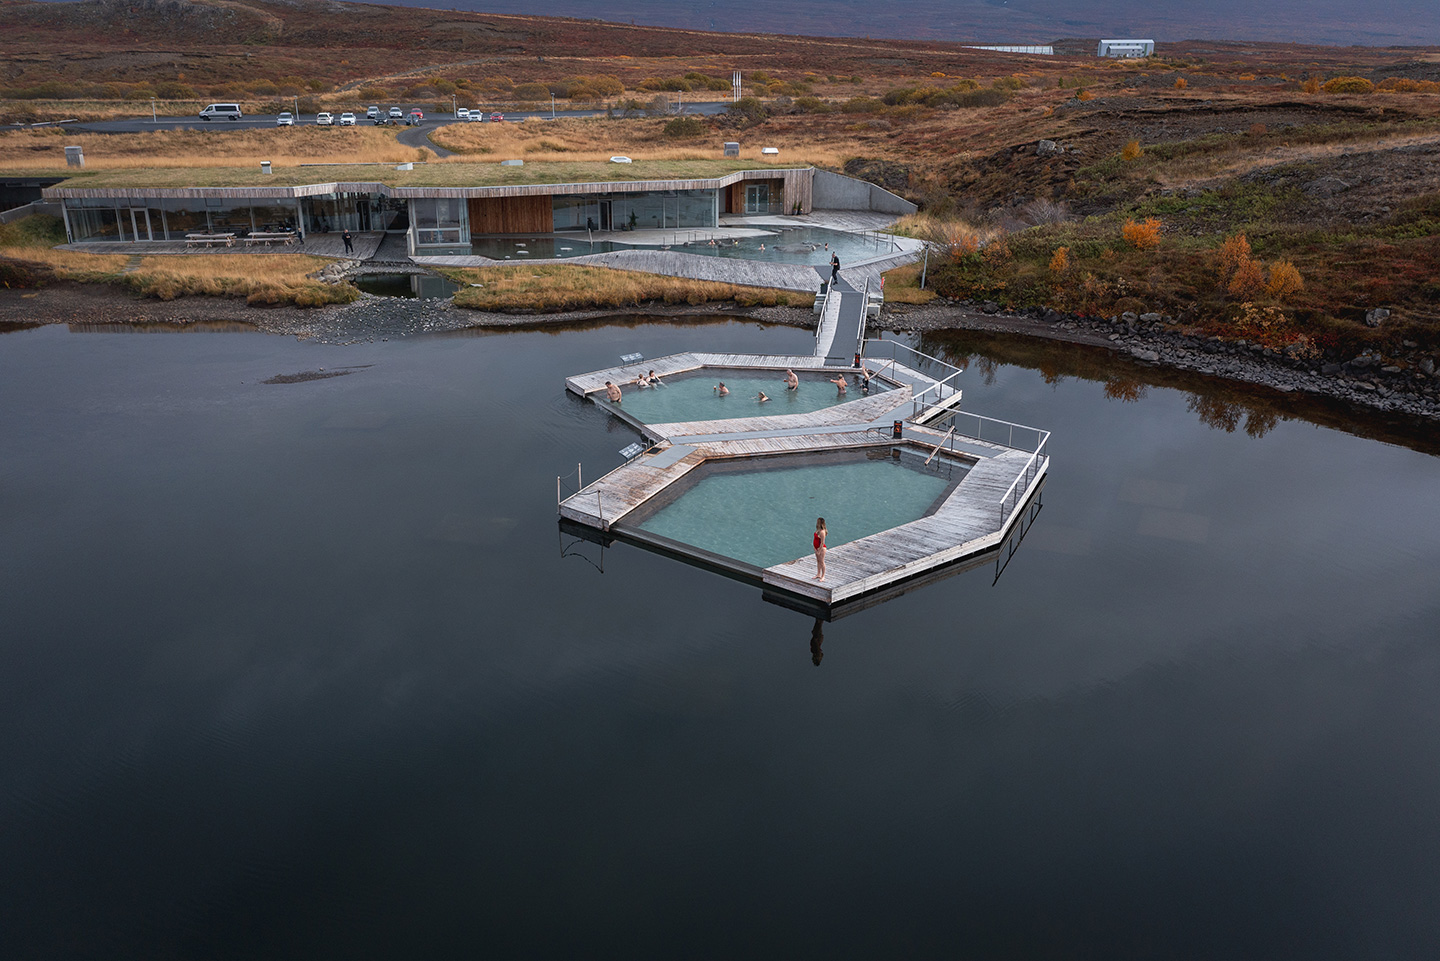 One of the best spots to soak in geothermal water is Vök baths